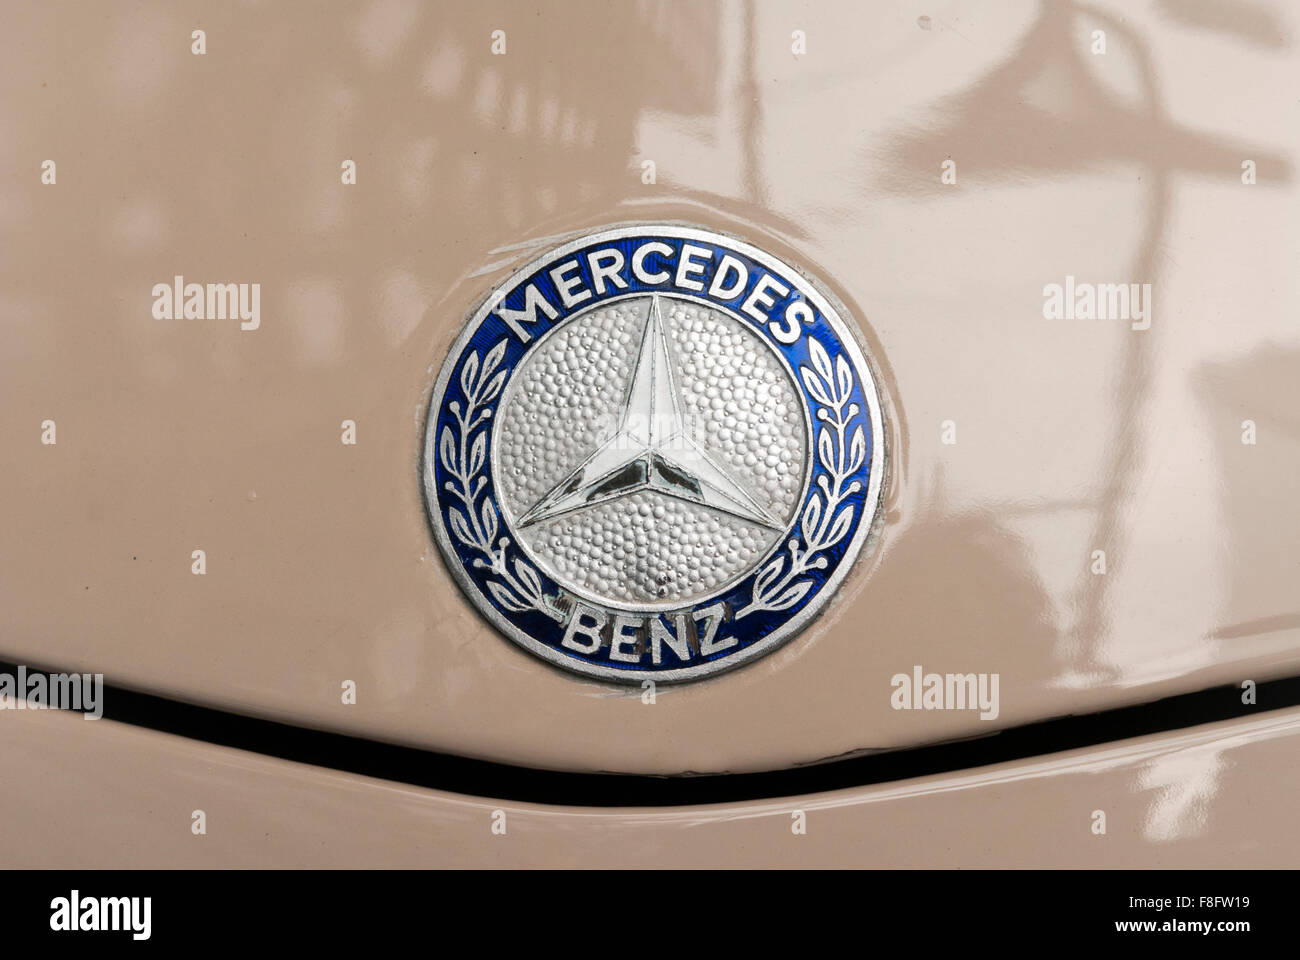 Mercedes-Benz Badge on Bonnet of Car Stock Photo - Alamy